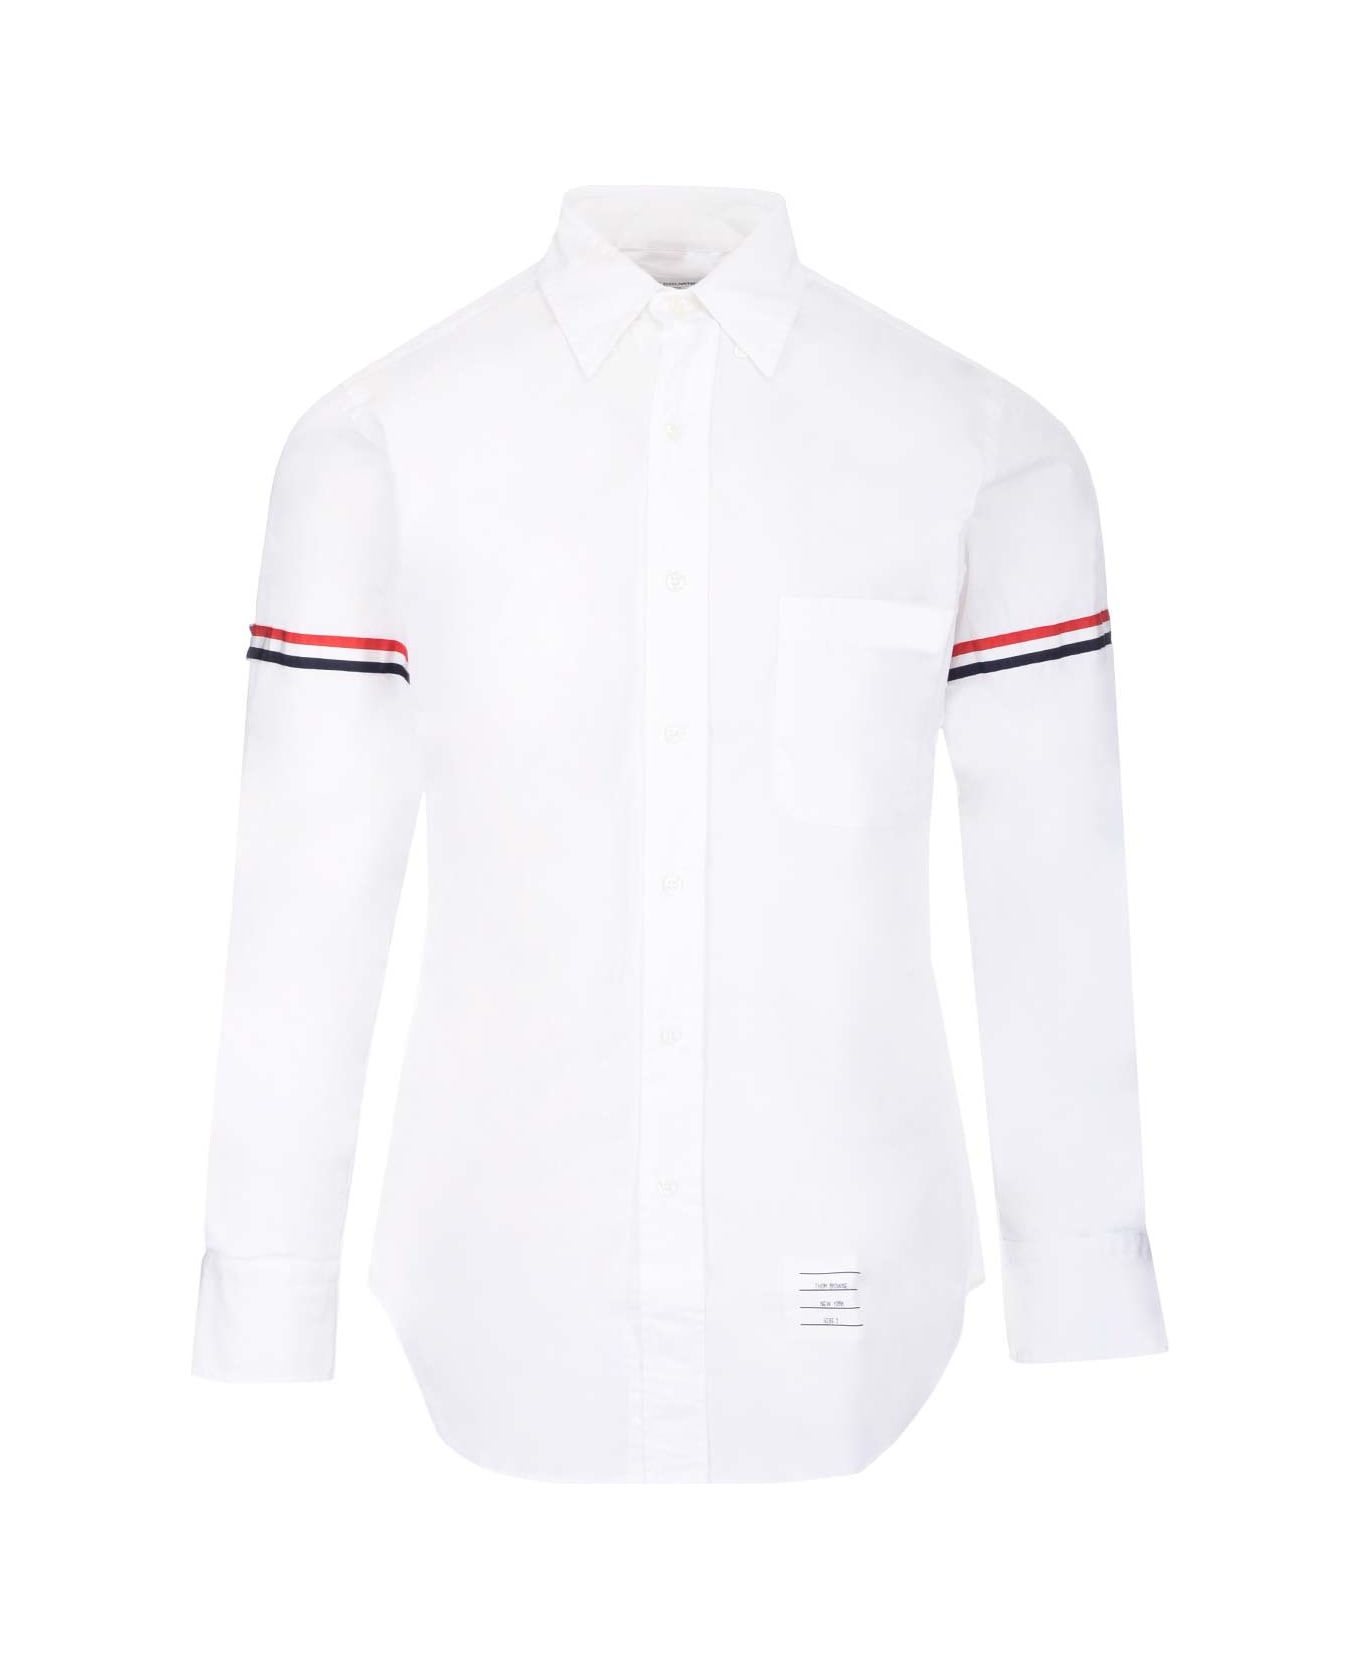 Thom Browne Armband Button Down Shirt - White